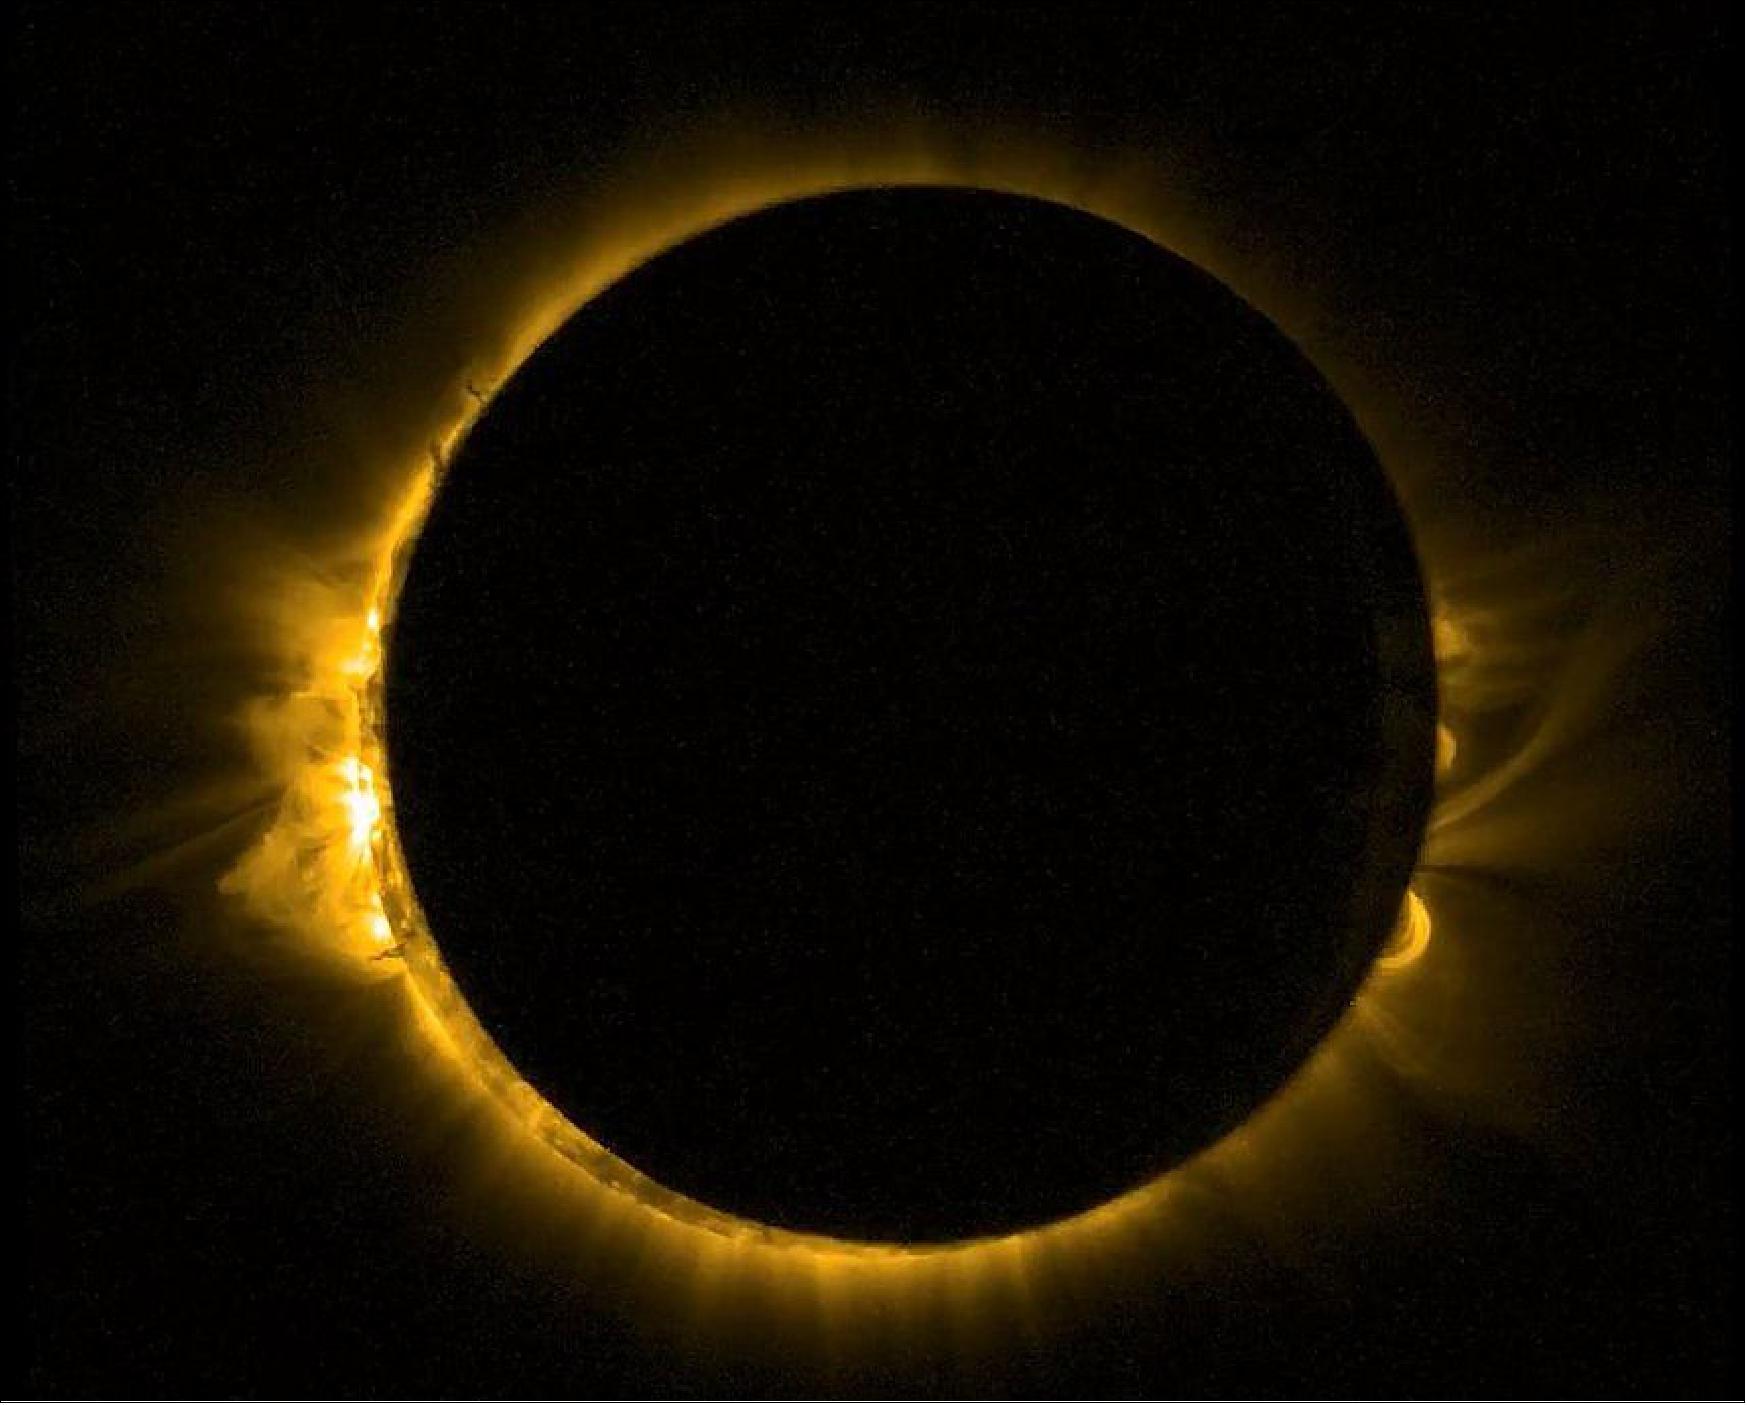 Figure 33: ESA's Sun-watching minisatellite captures the solar eclipse footage from orbit (image credit: ESA)